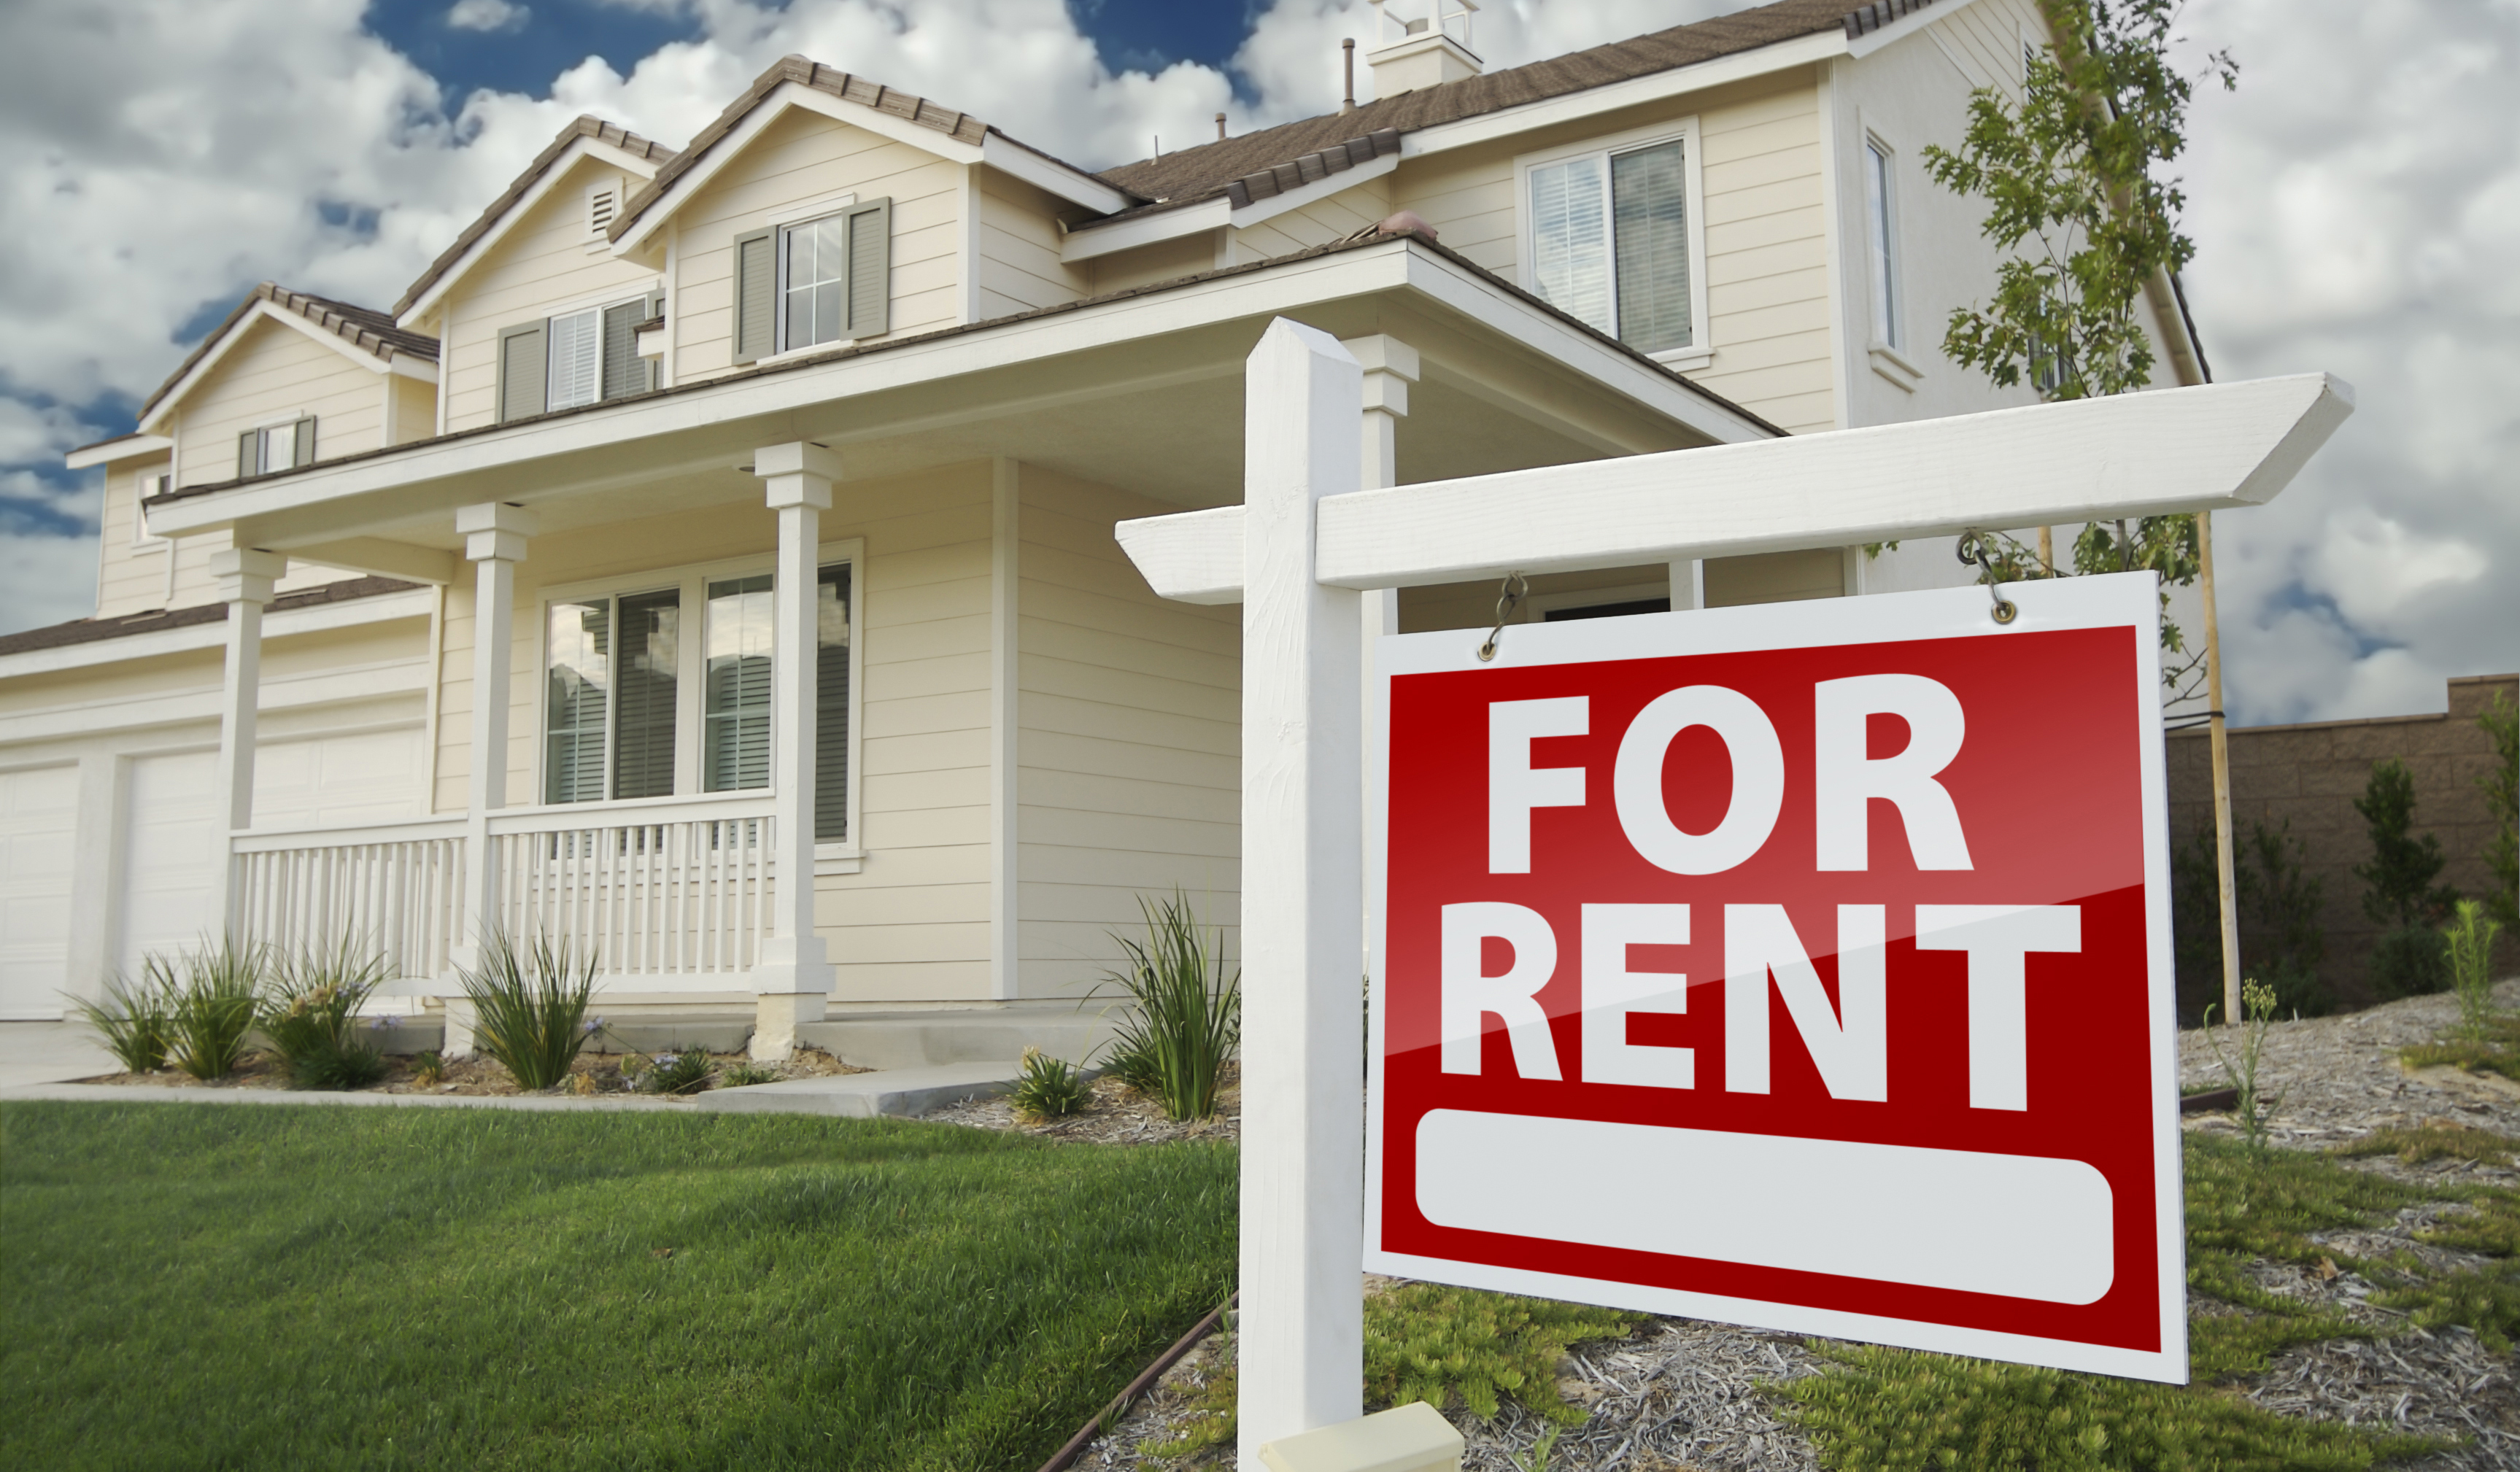 Housr ventures into rental homes business